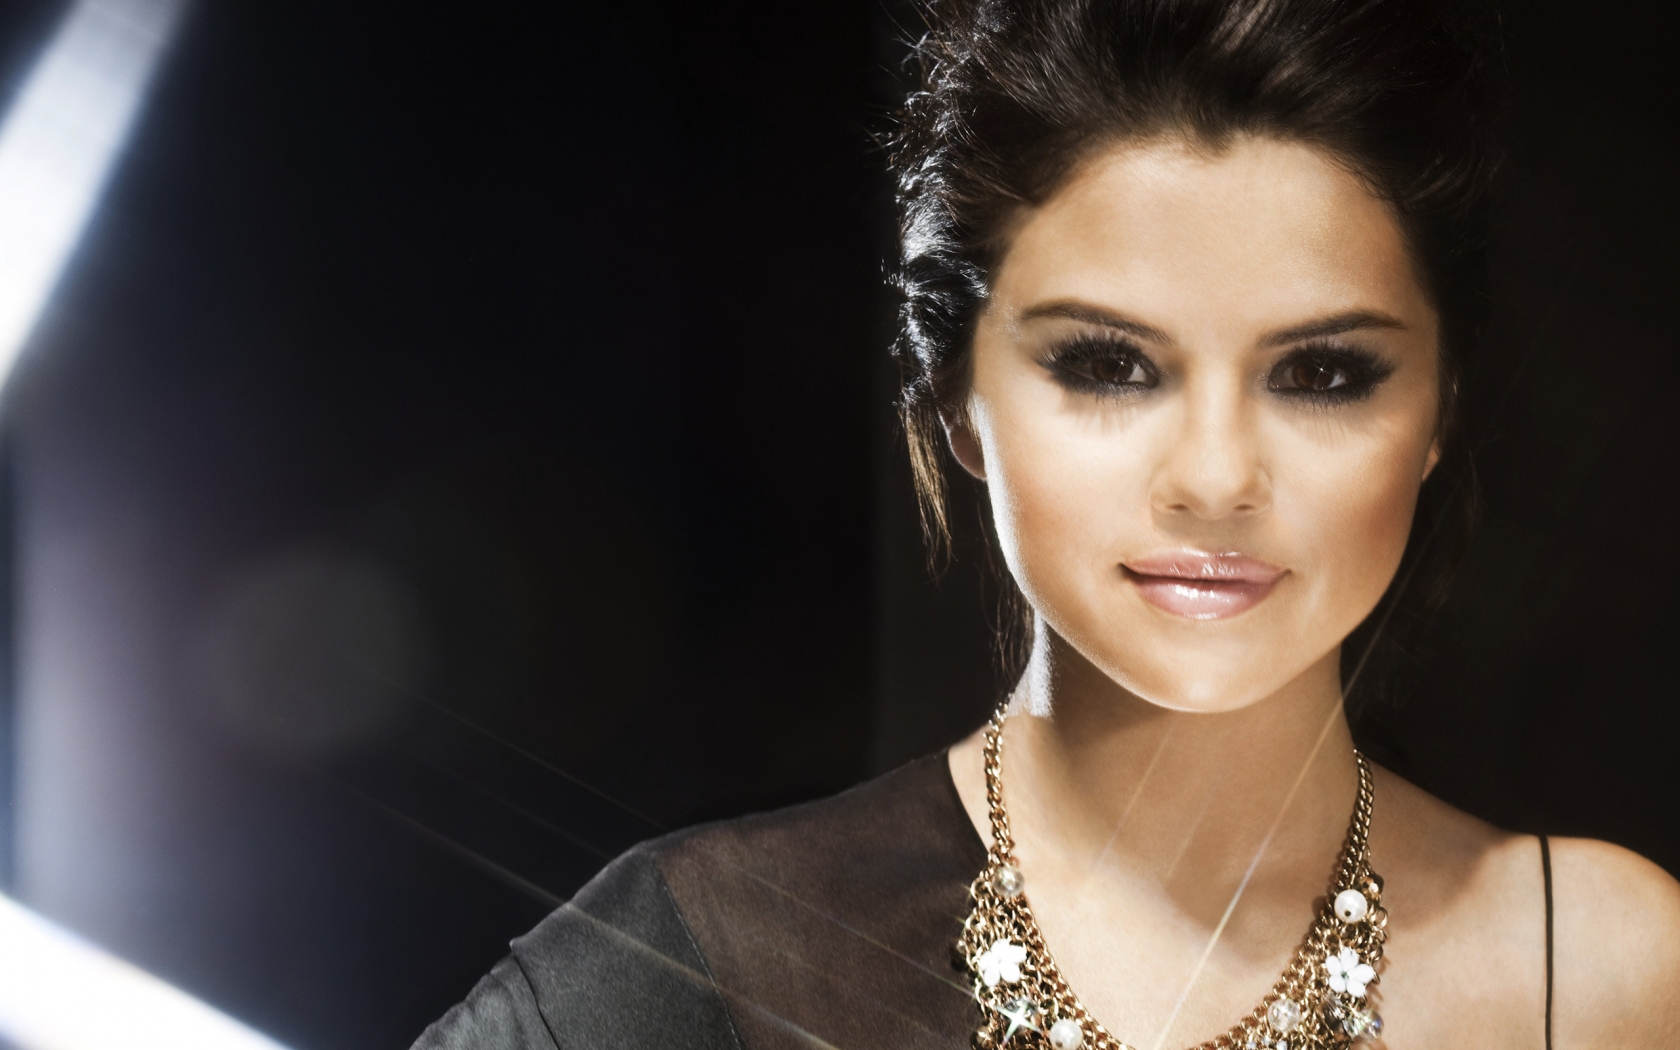 Beautiful Selena Gomez for 1680 x 1050 widescreen resolution